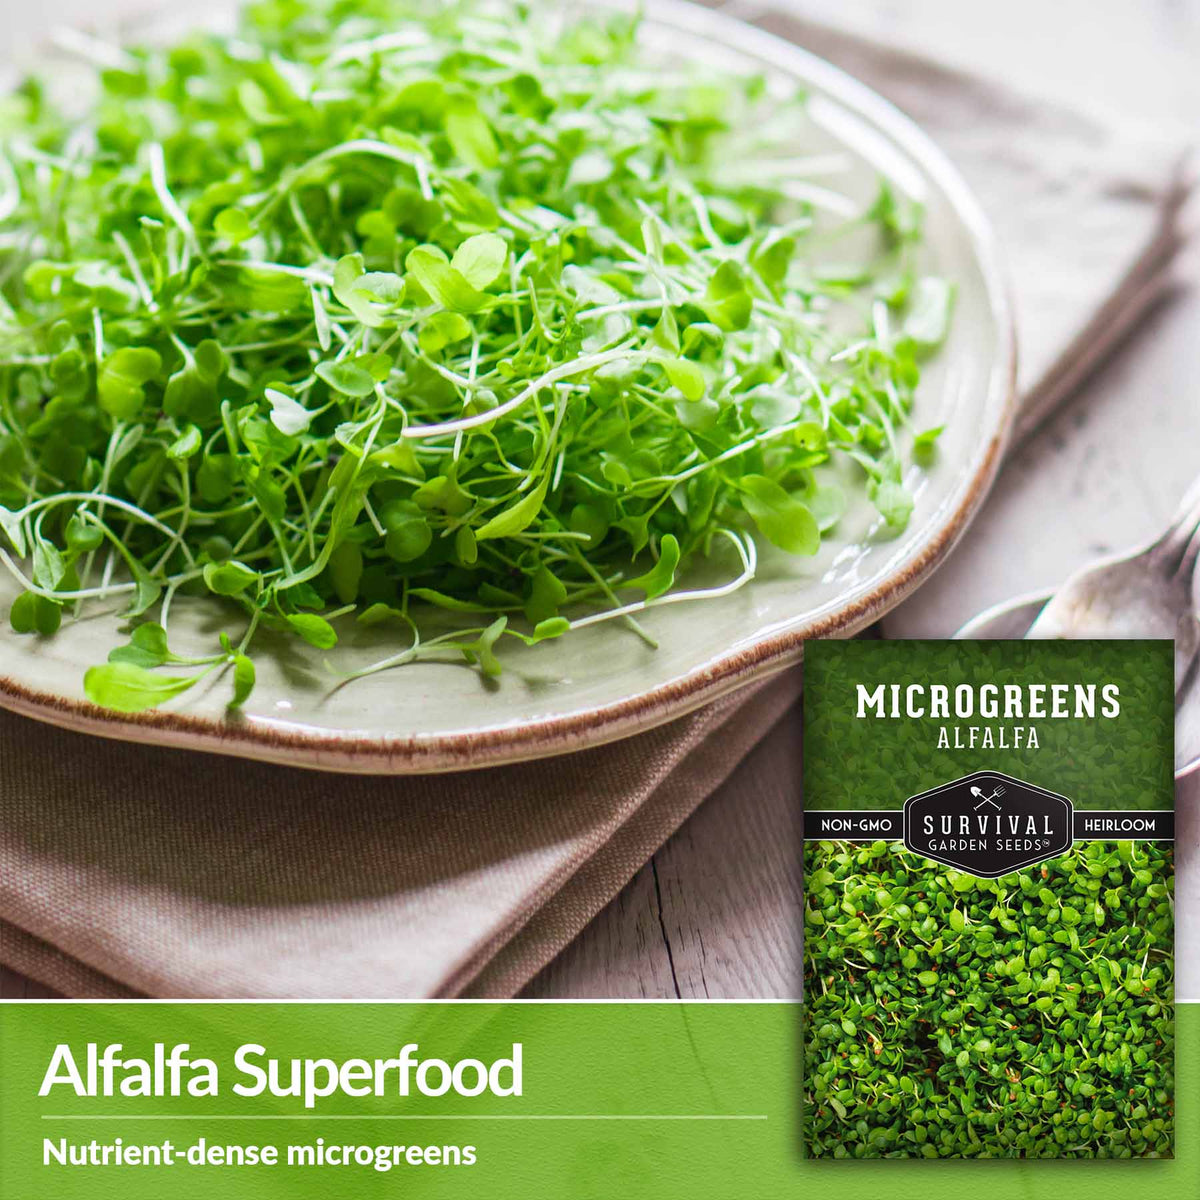 Alfalfa superfood - Nutrient-dense microgreens